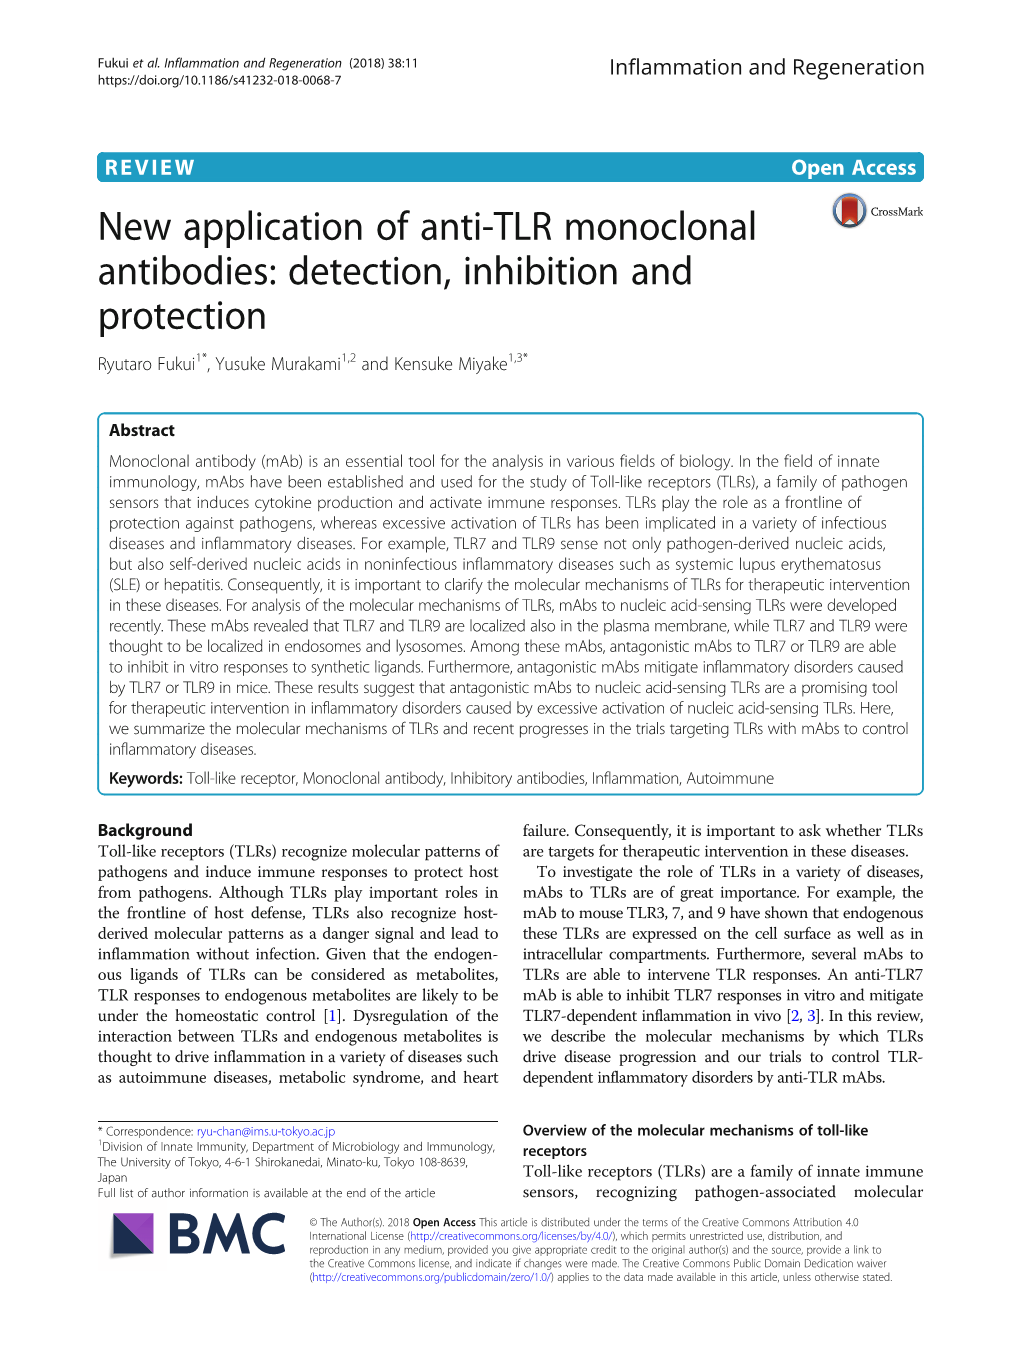 New Application of Anti-TLR Monoclonal Antibodies: Detection, Inhibition and Protection Ryutaro Fukui1*, Yusuke Murakami1,2 and Kensuke Miyake1,3*